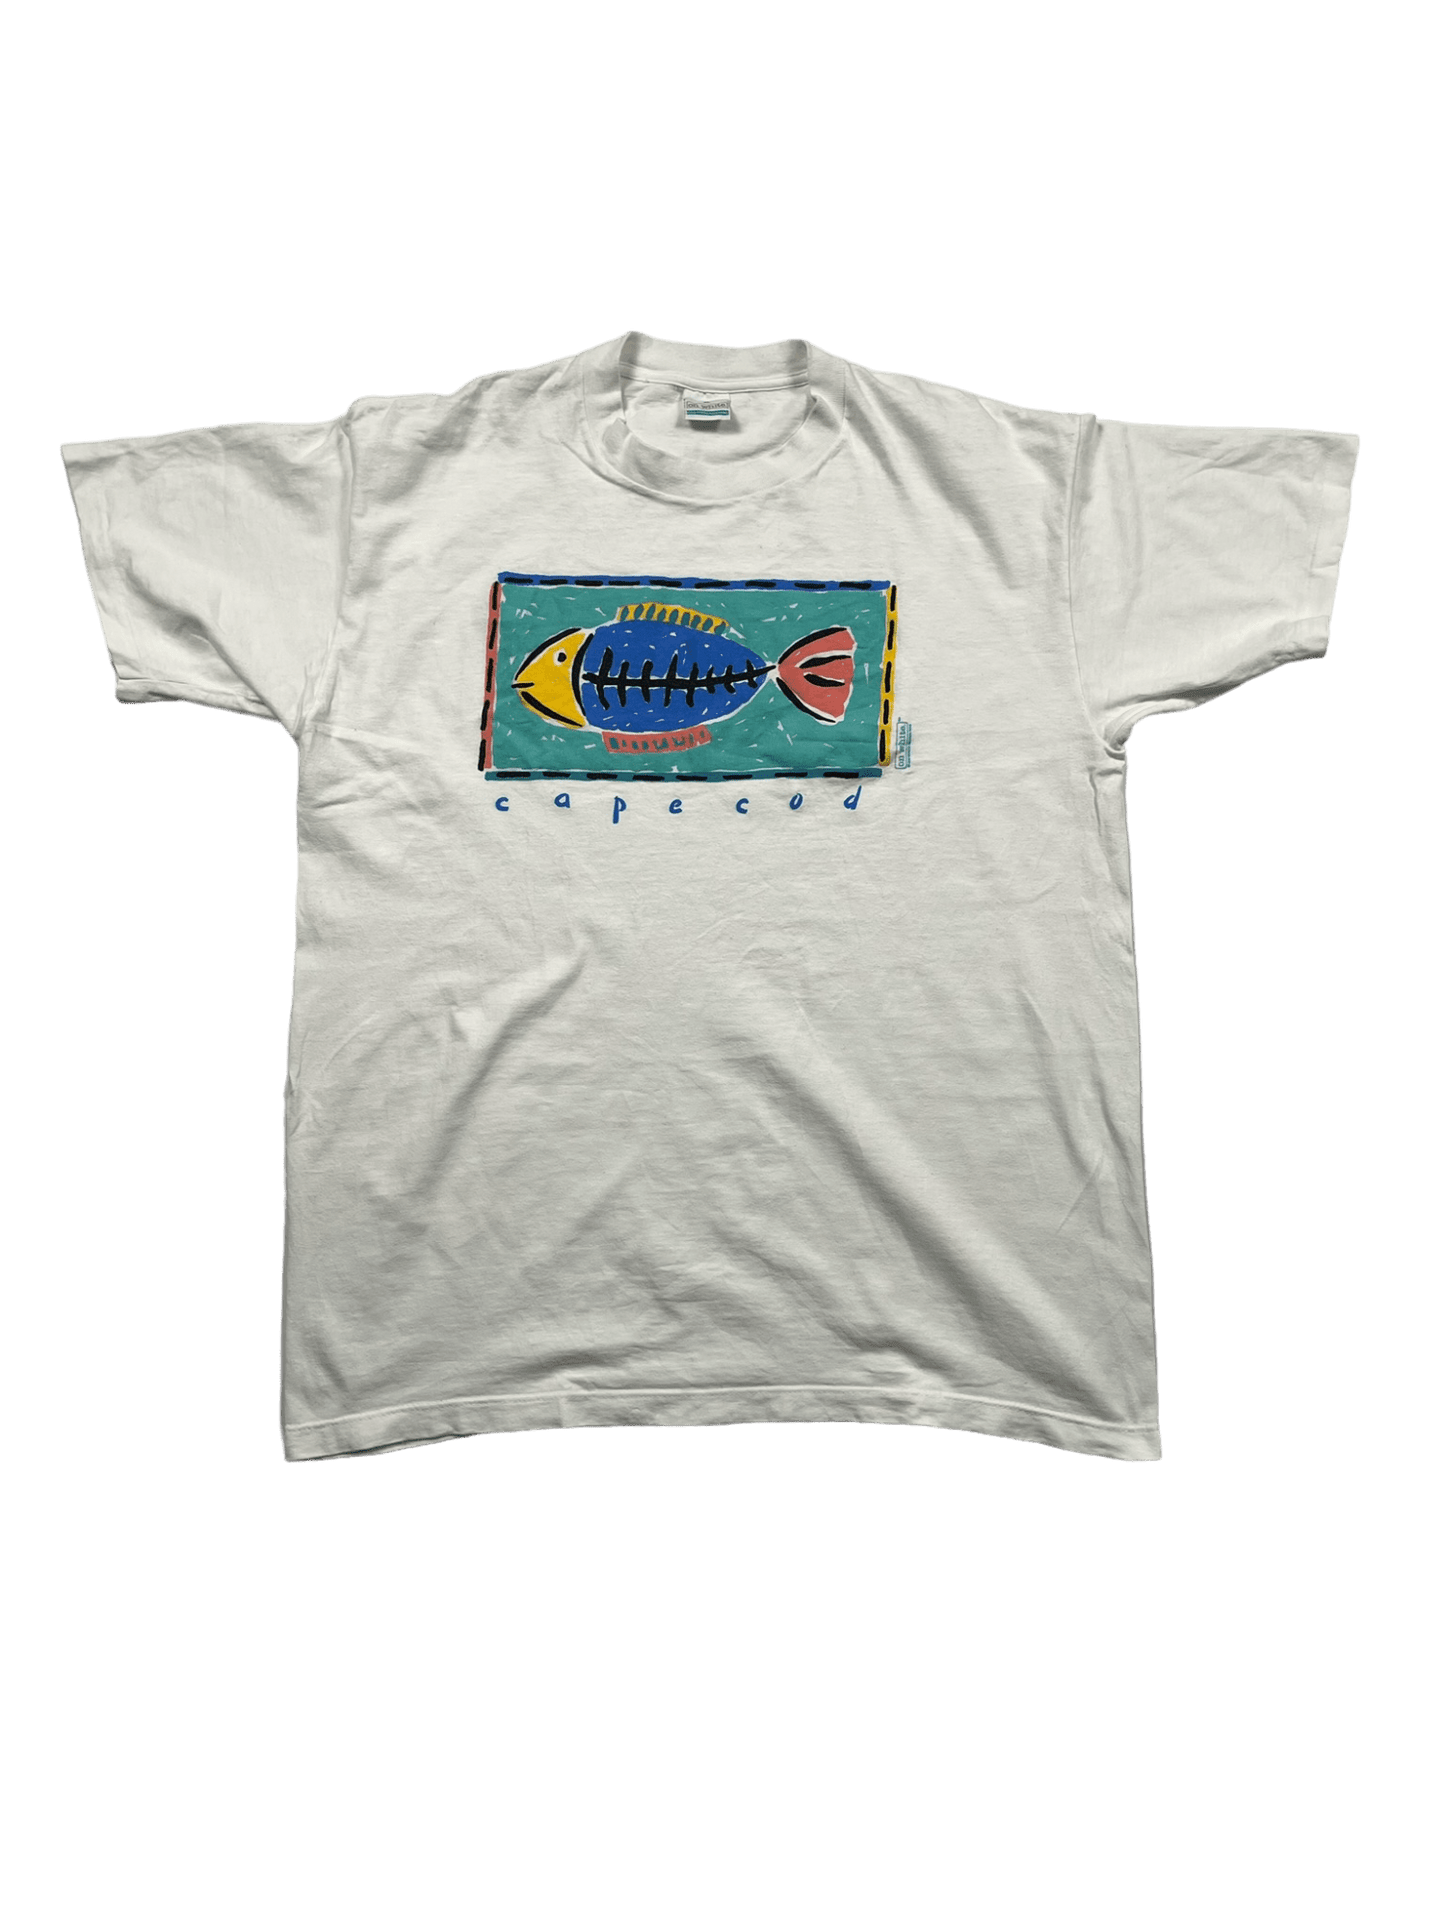 The Vintage Racks T-Shirt Capecod Fish - XL